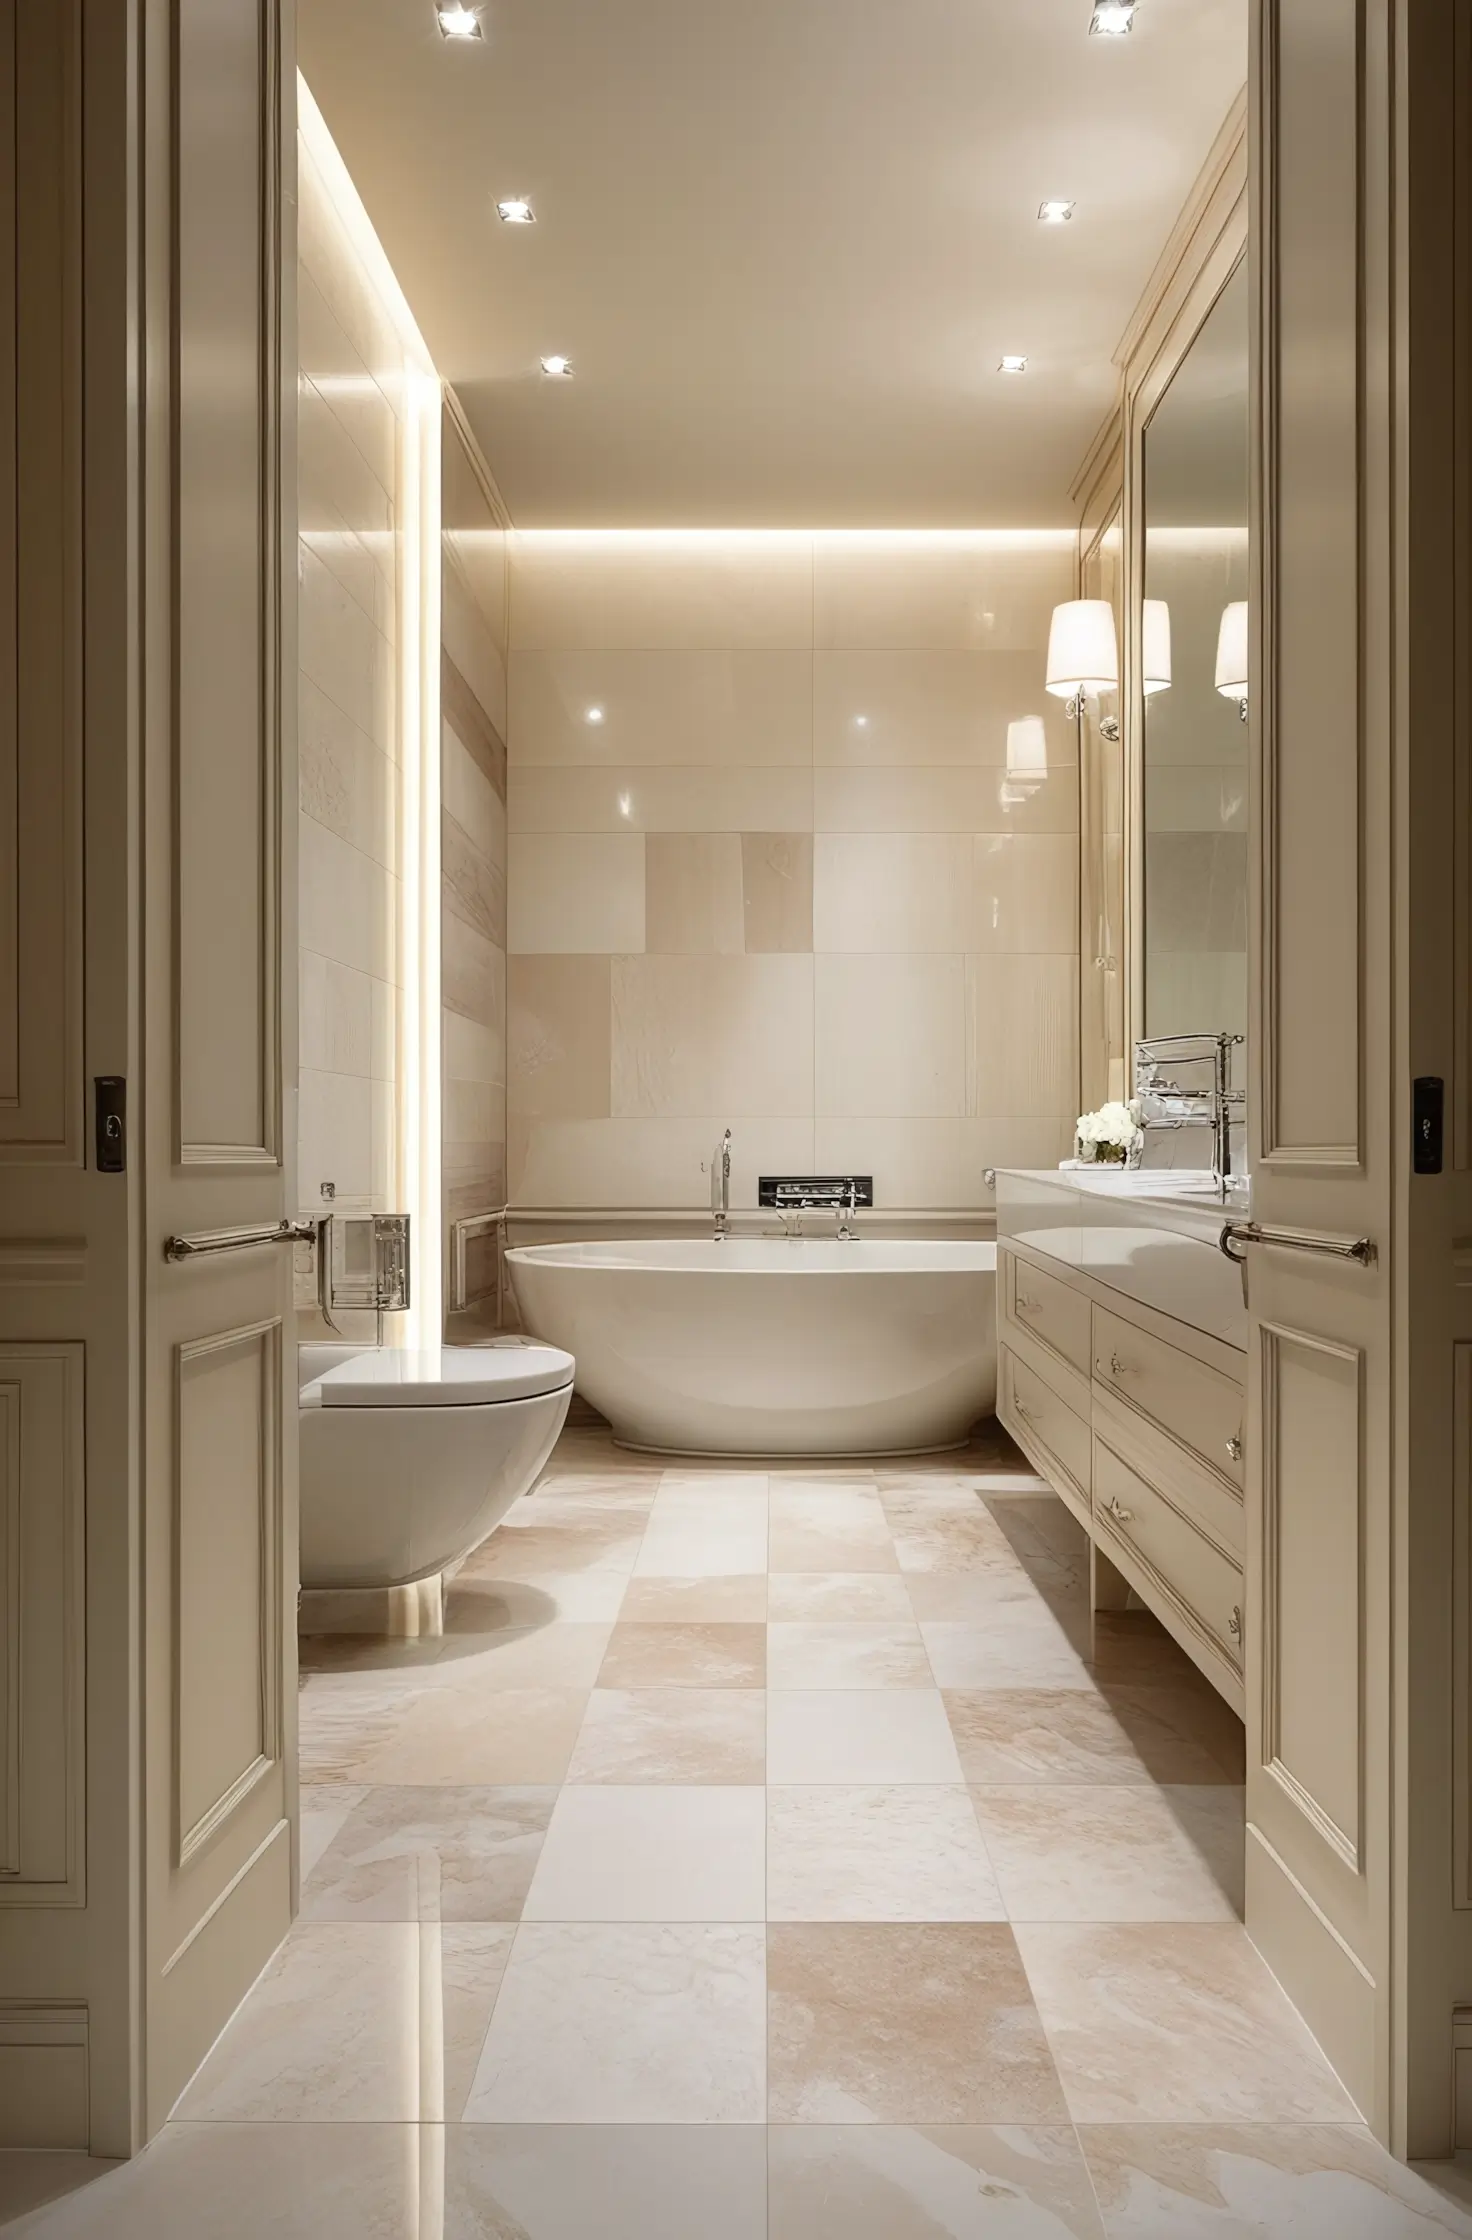 Bathroom with floor tiles in neutral tones featuring sleek and elegant designs.